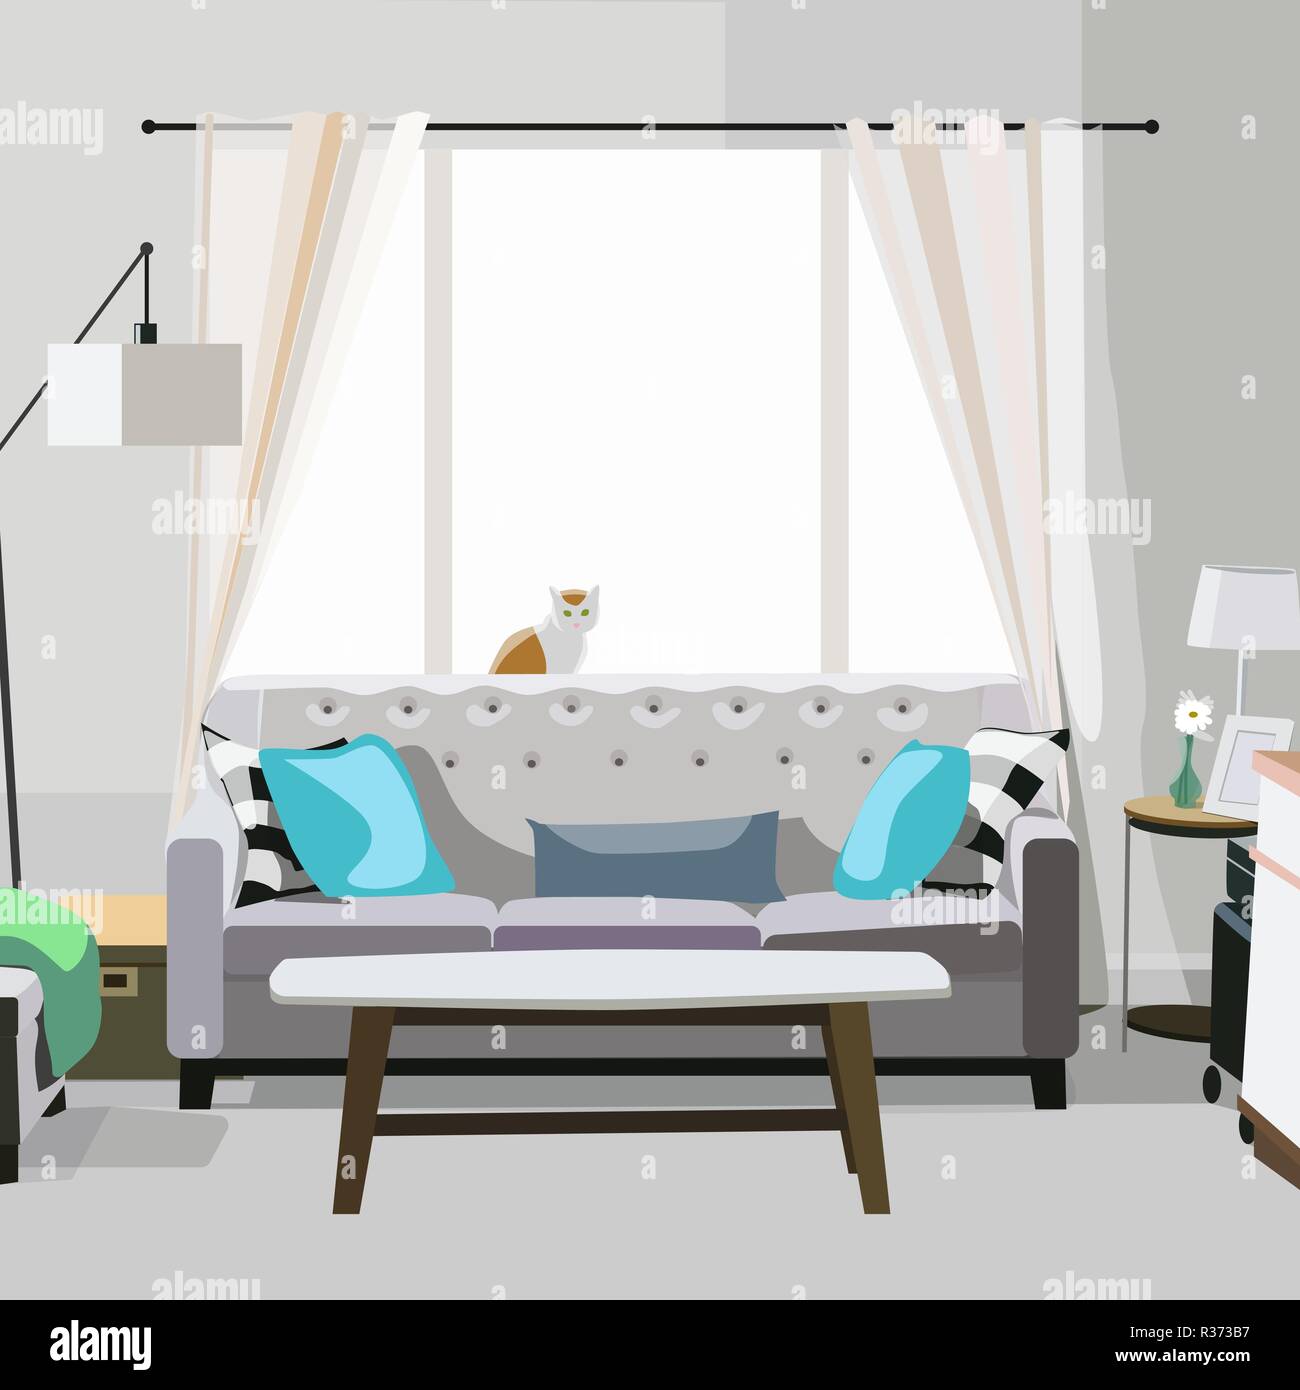 modern vector living room interior design. apartment illustration. Stock Vector